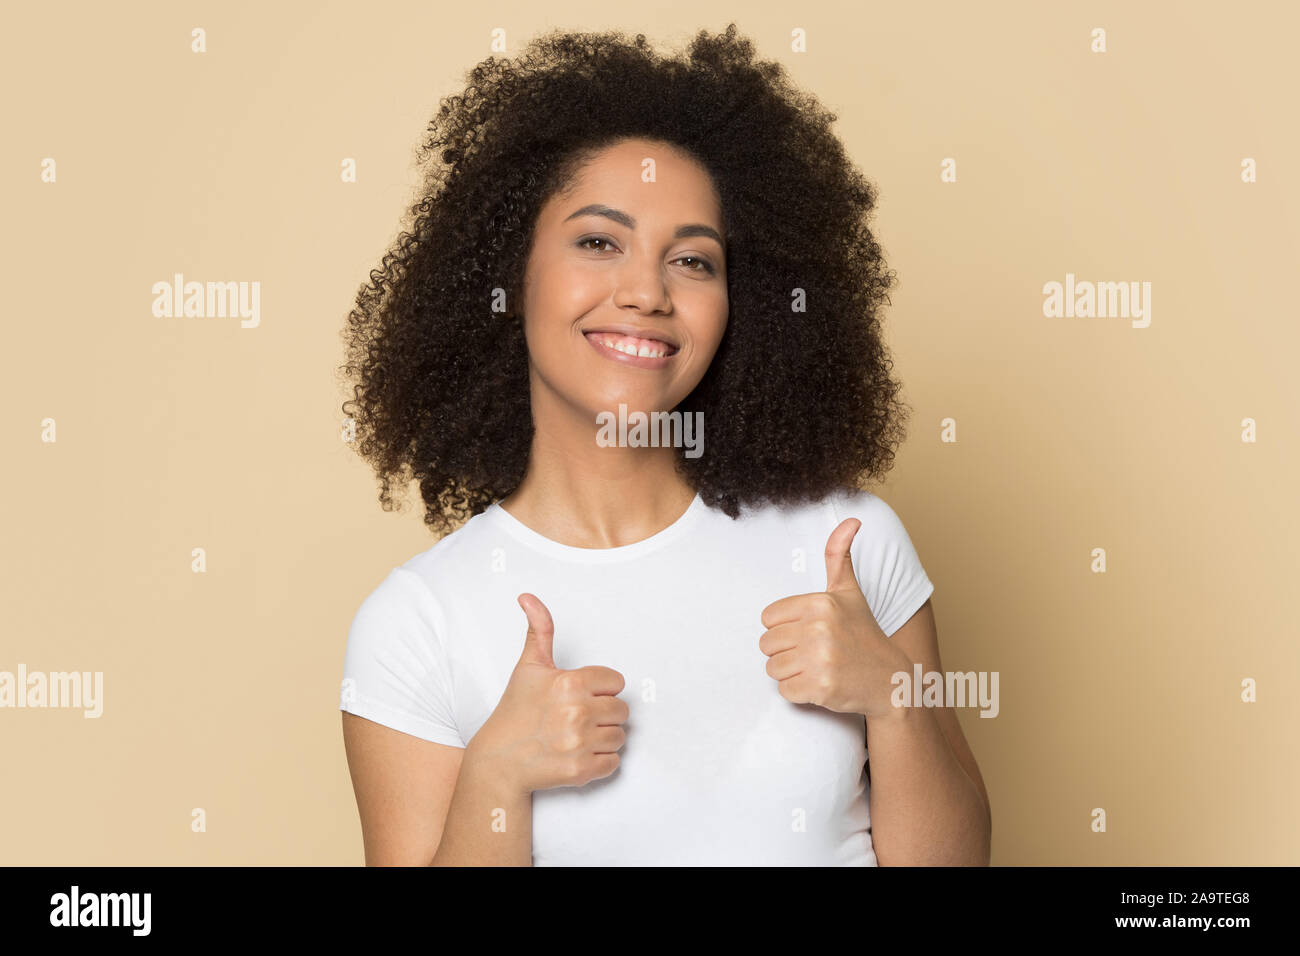 Hermosa chica americana africana con sonrisa saludable mostrando Thumbs up Foto de stock